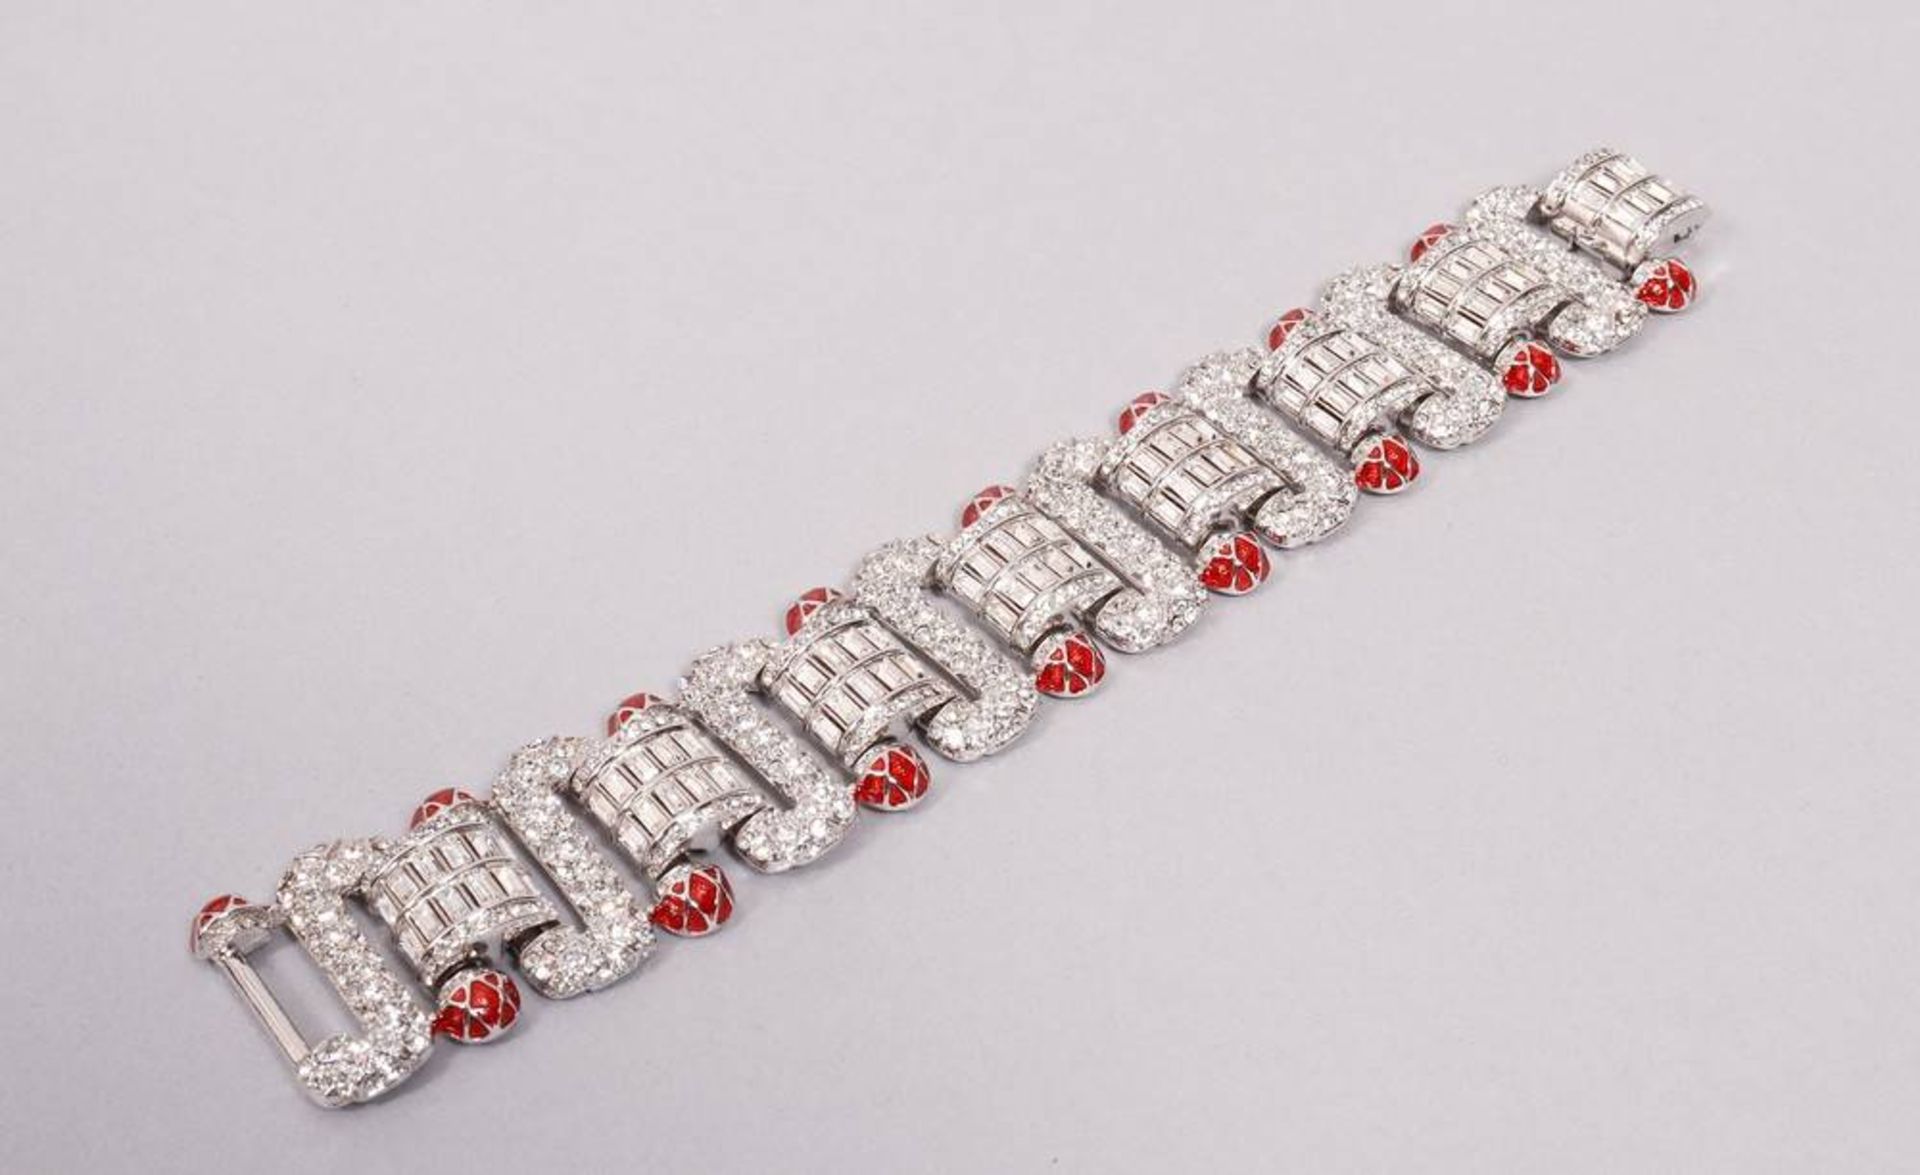 Bracelet, Art Deco style, costume jewelry, 20th century - Image 2 of 4